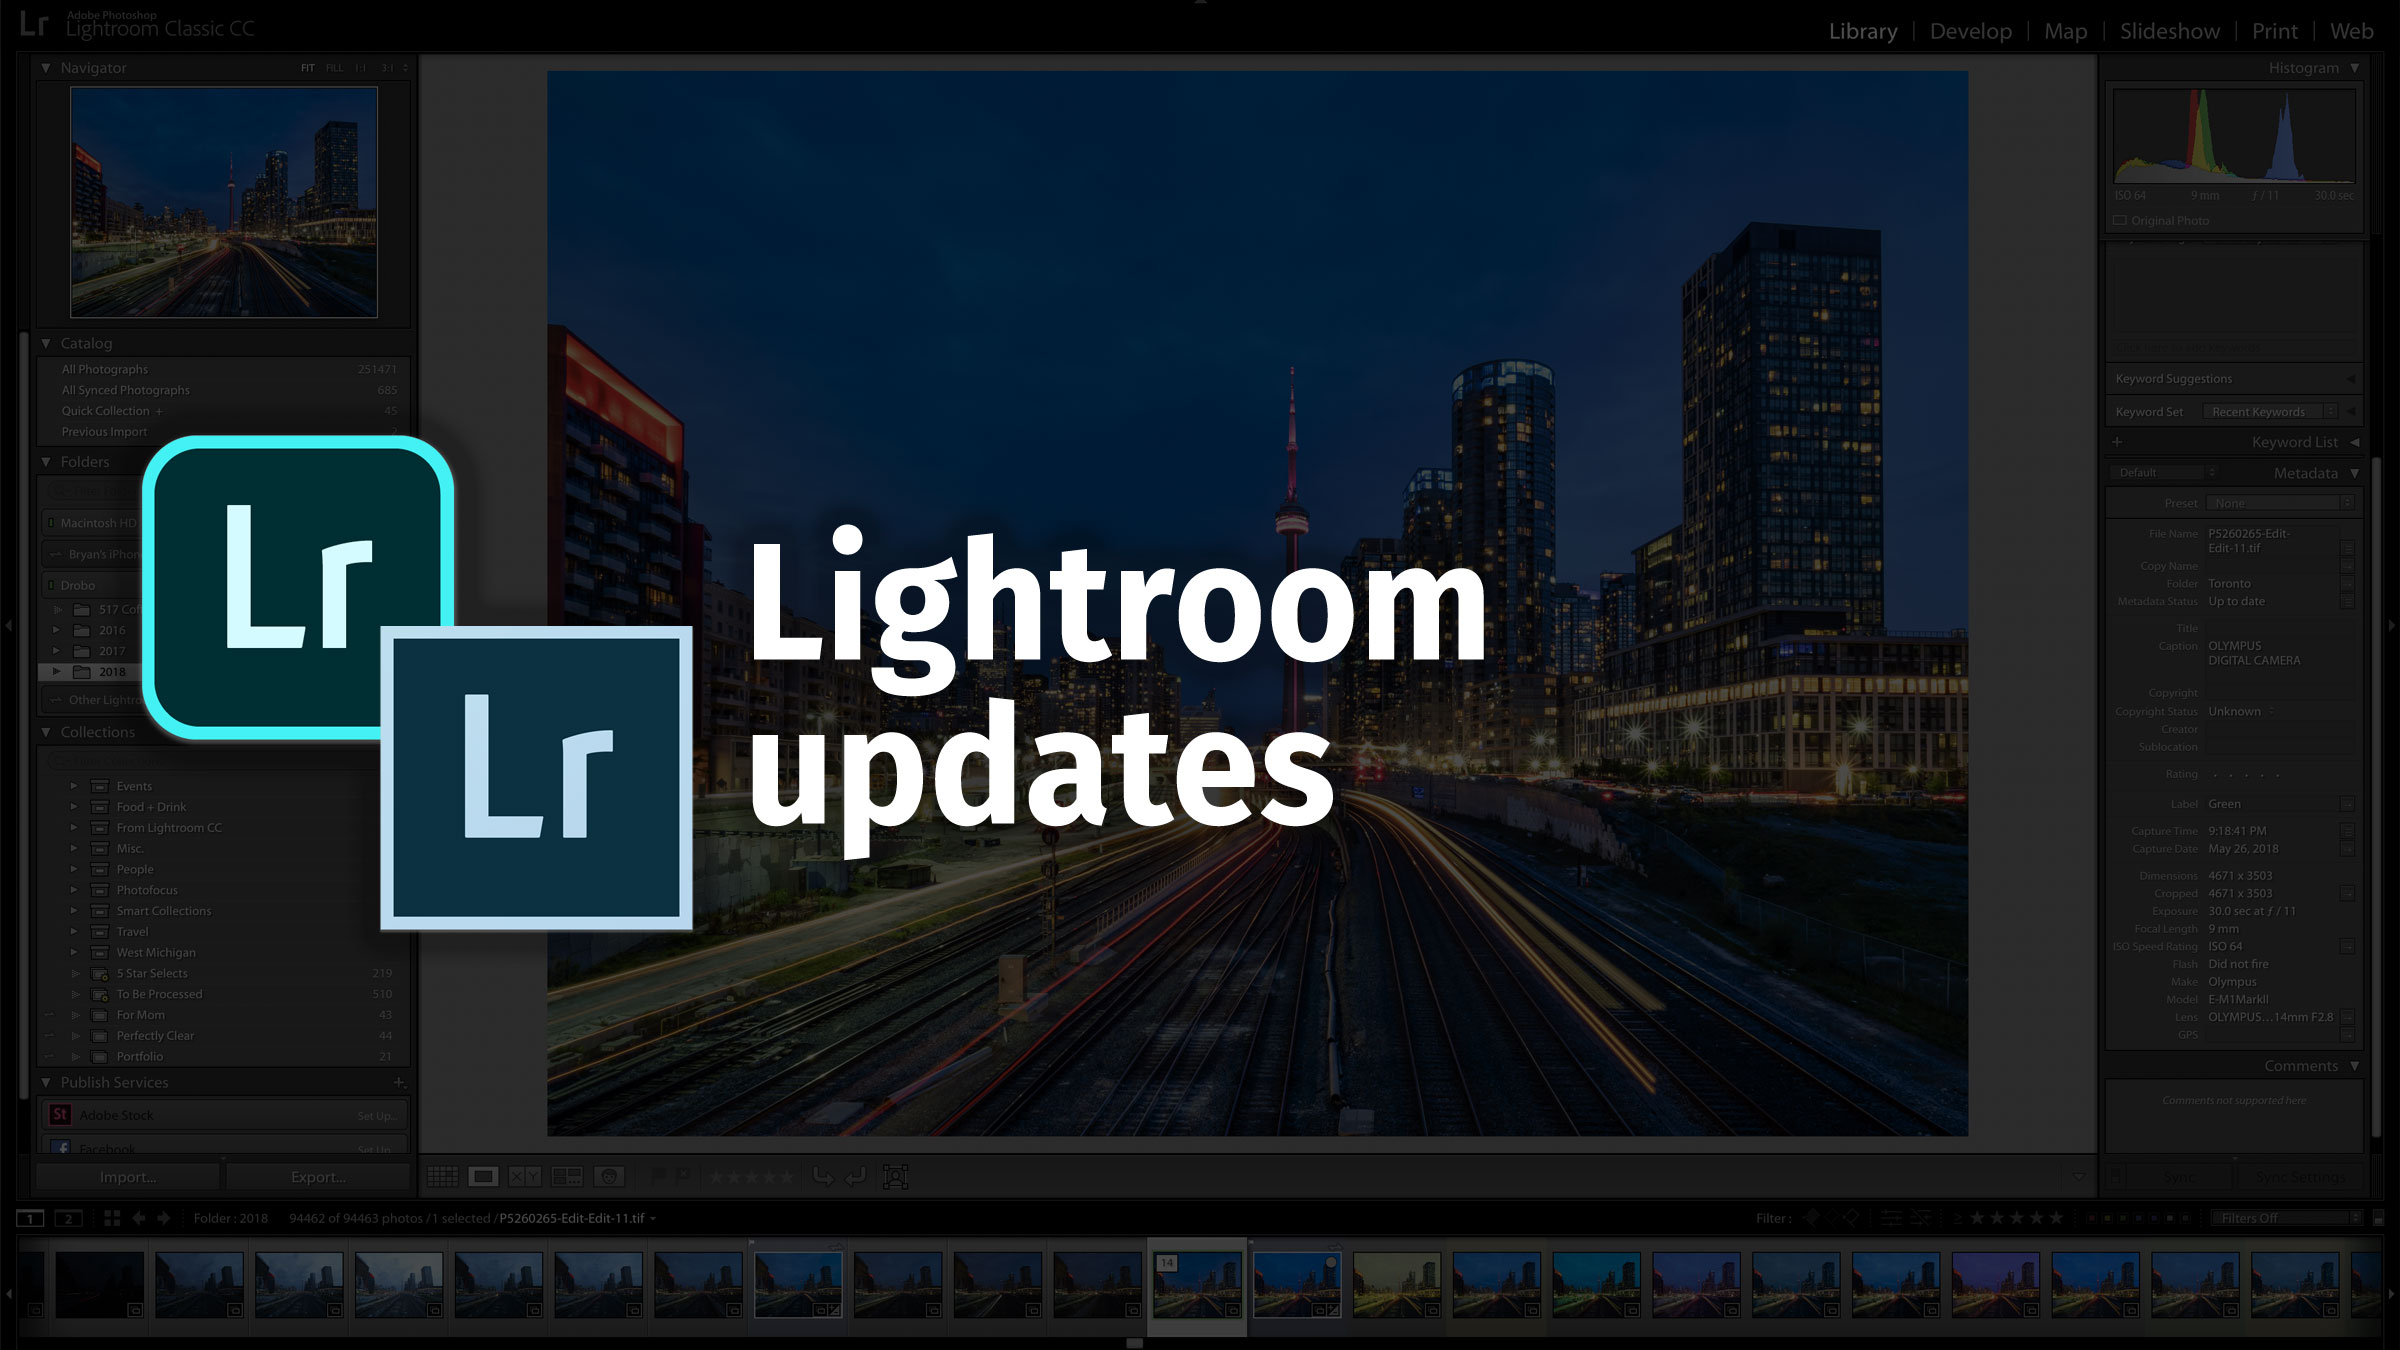 Adobe adds new Texture slider, contextual help and tutorials to Lightroom ecosystem